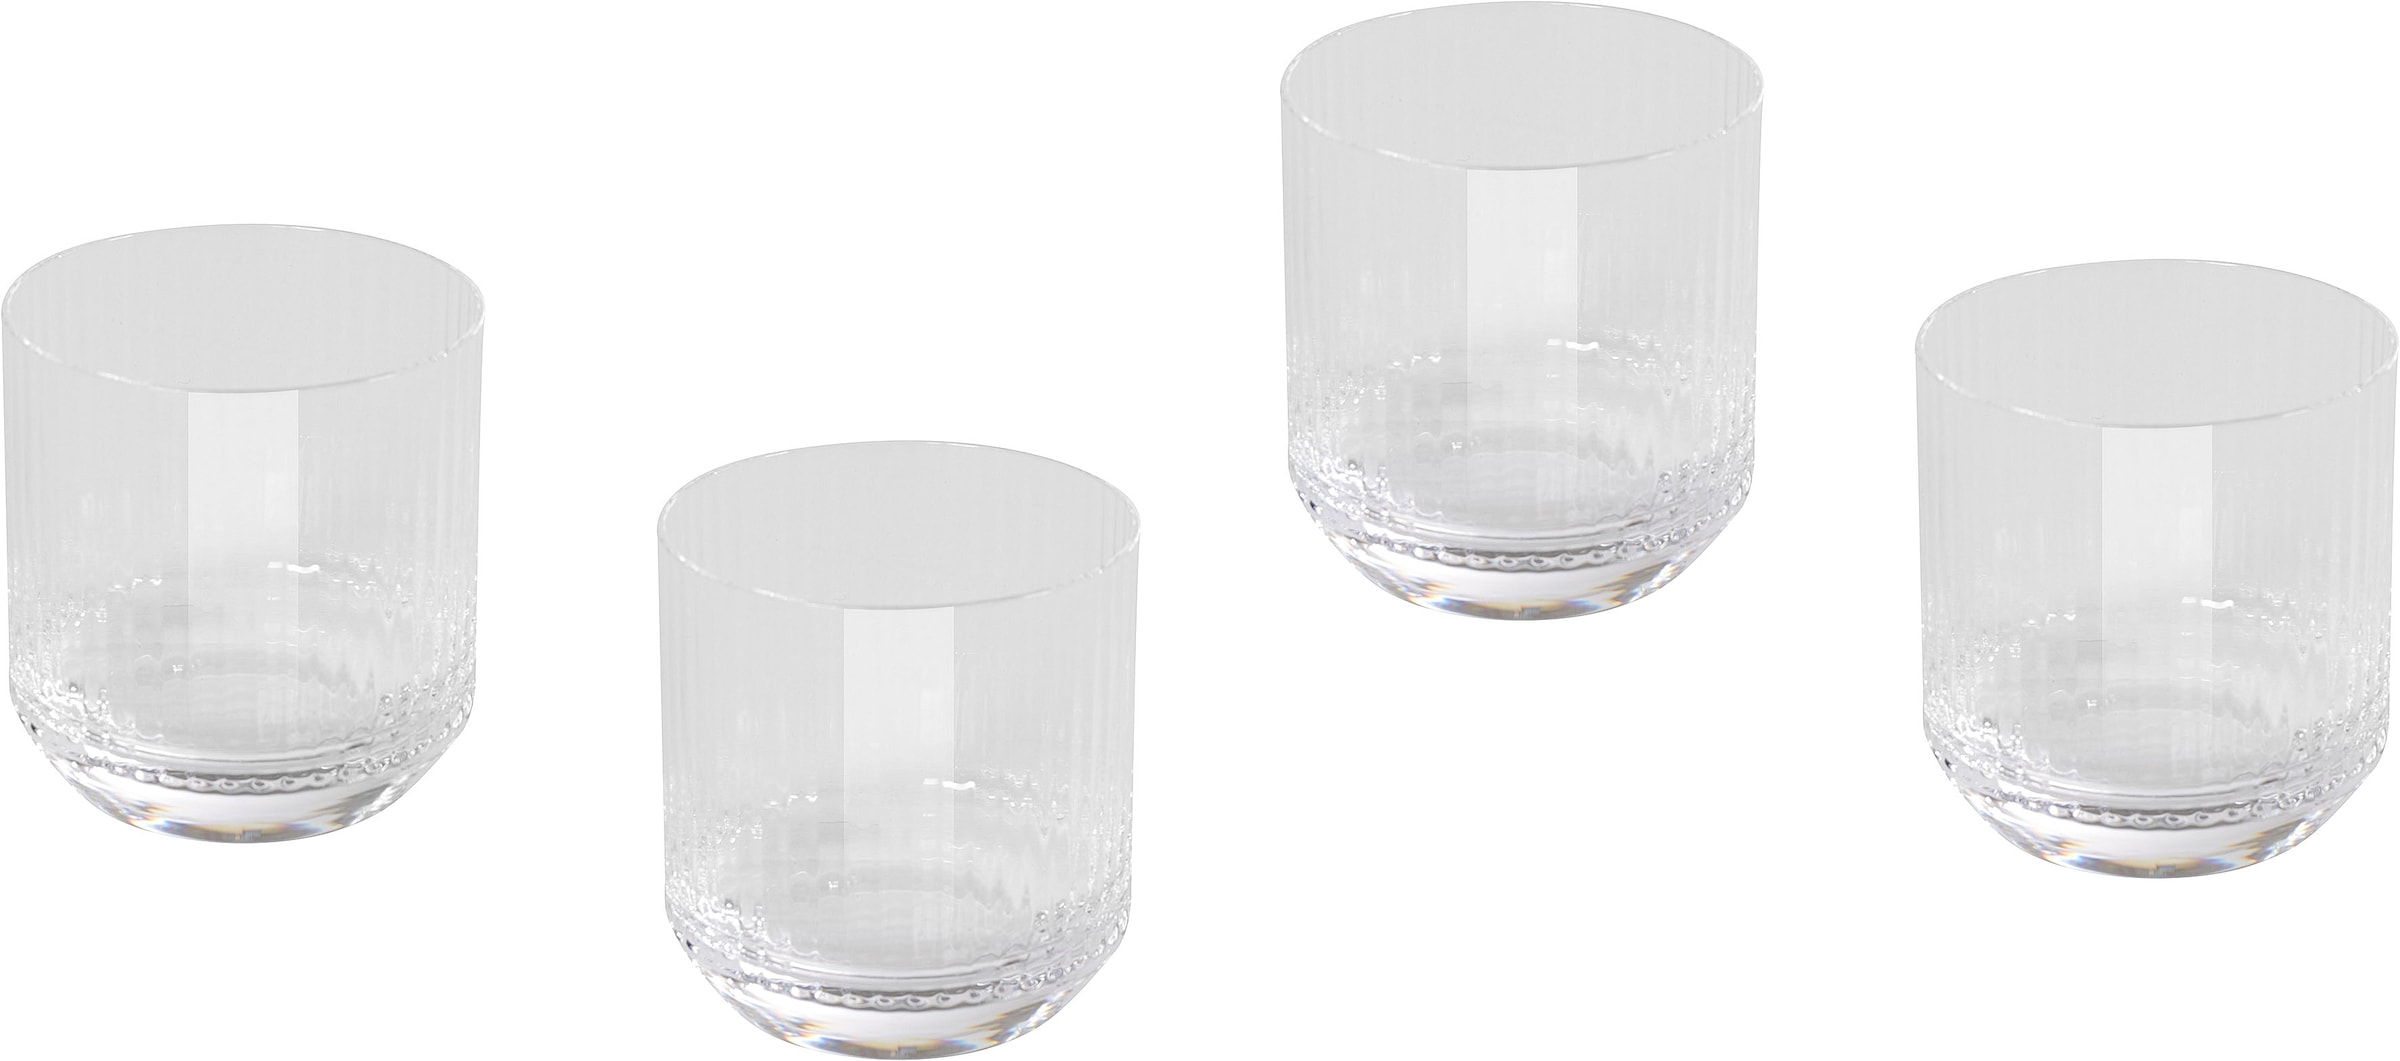 Home affaire Whiskyglas, (Set, 4 tlg.), trendige Riffelstruktur, 32 cl, 4-teilig